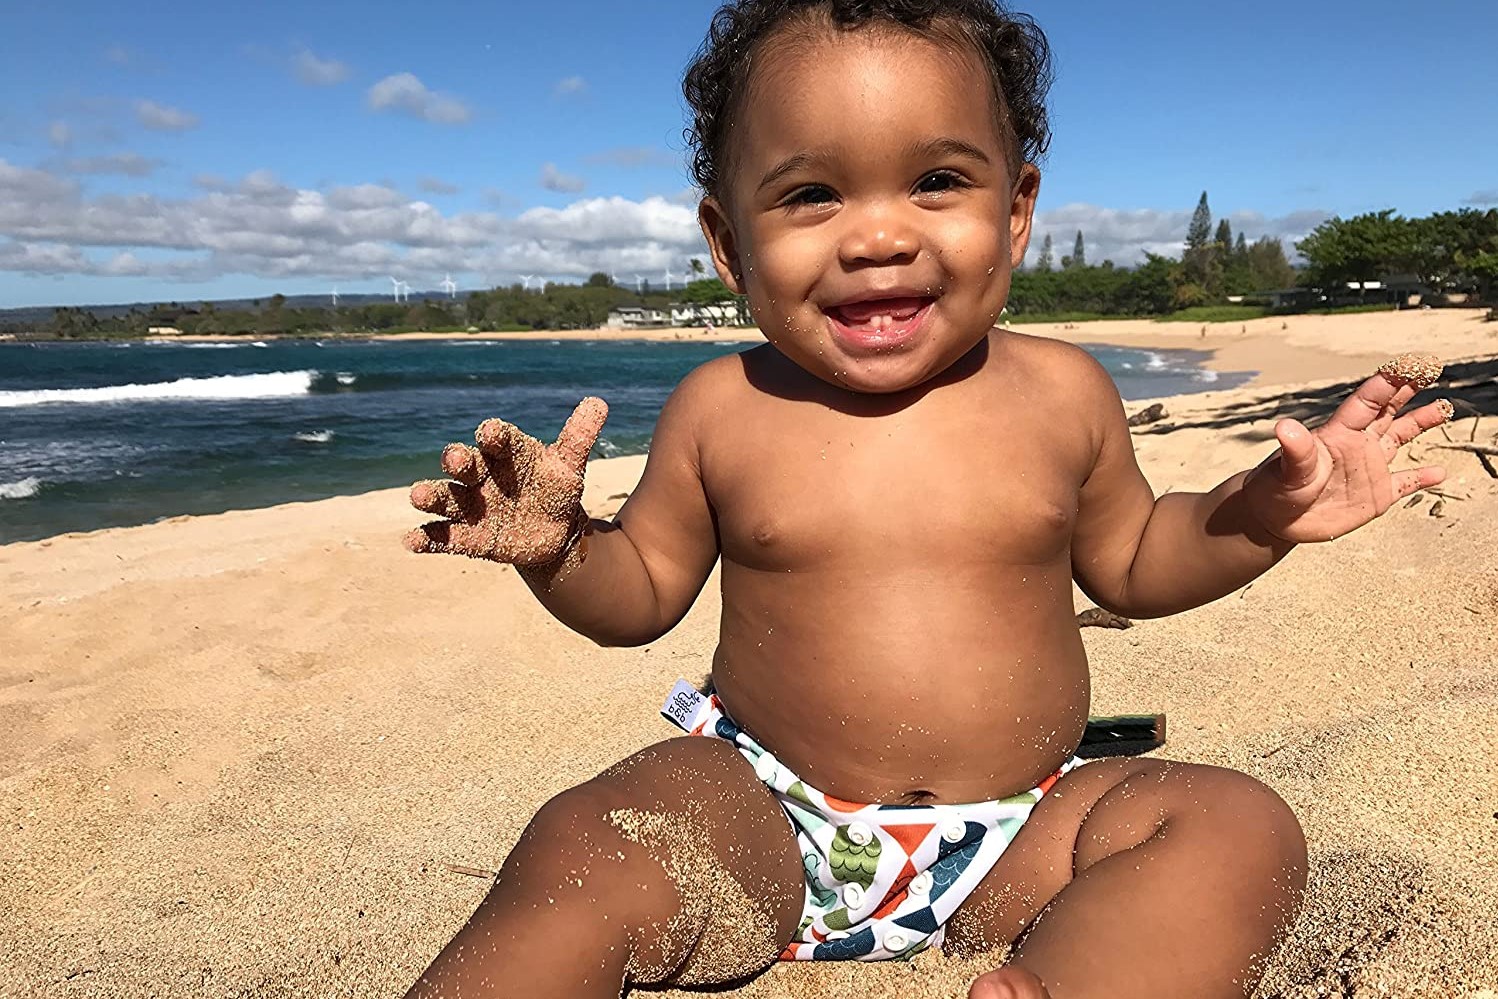 Laughing baby on beach in swim diaper